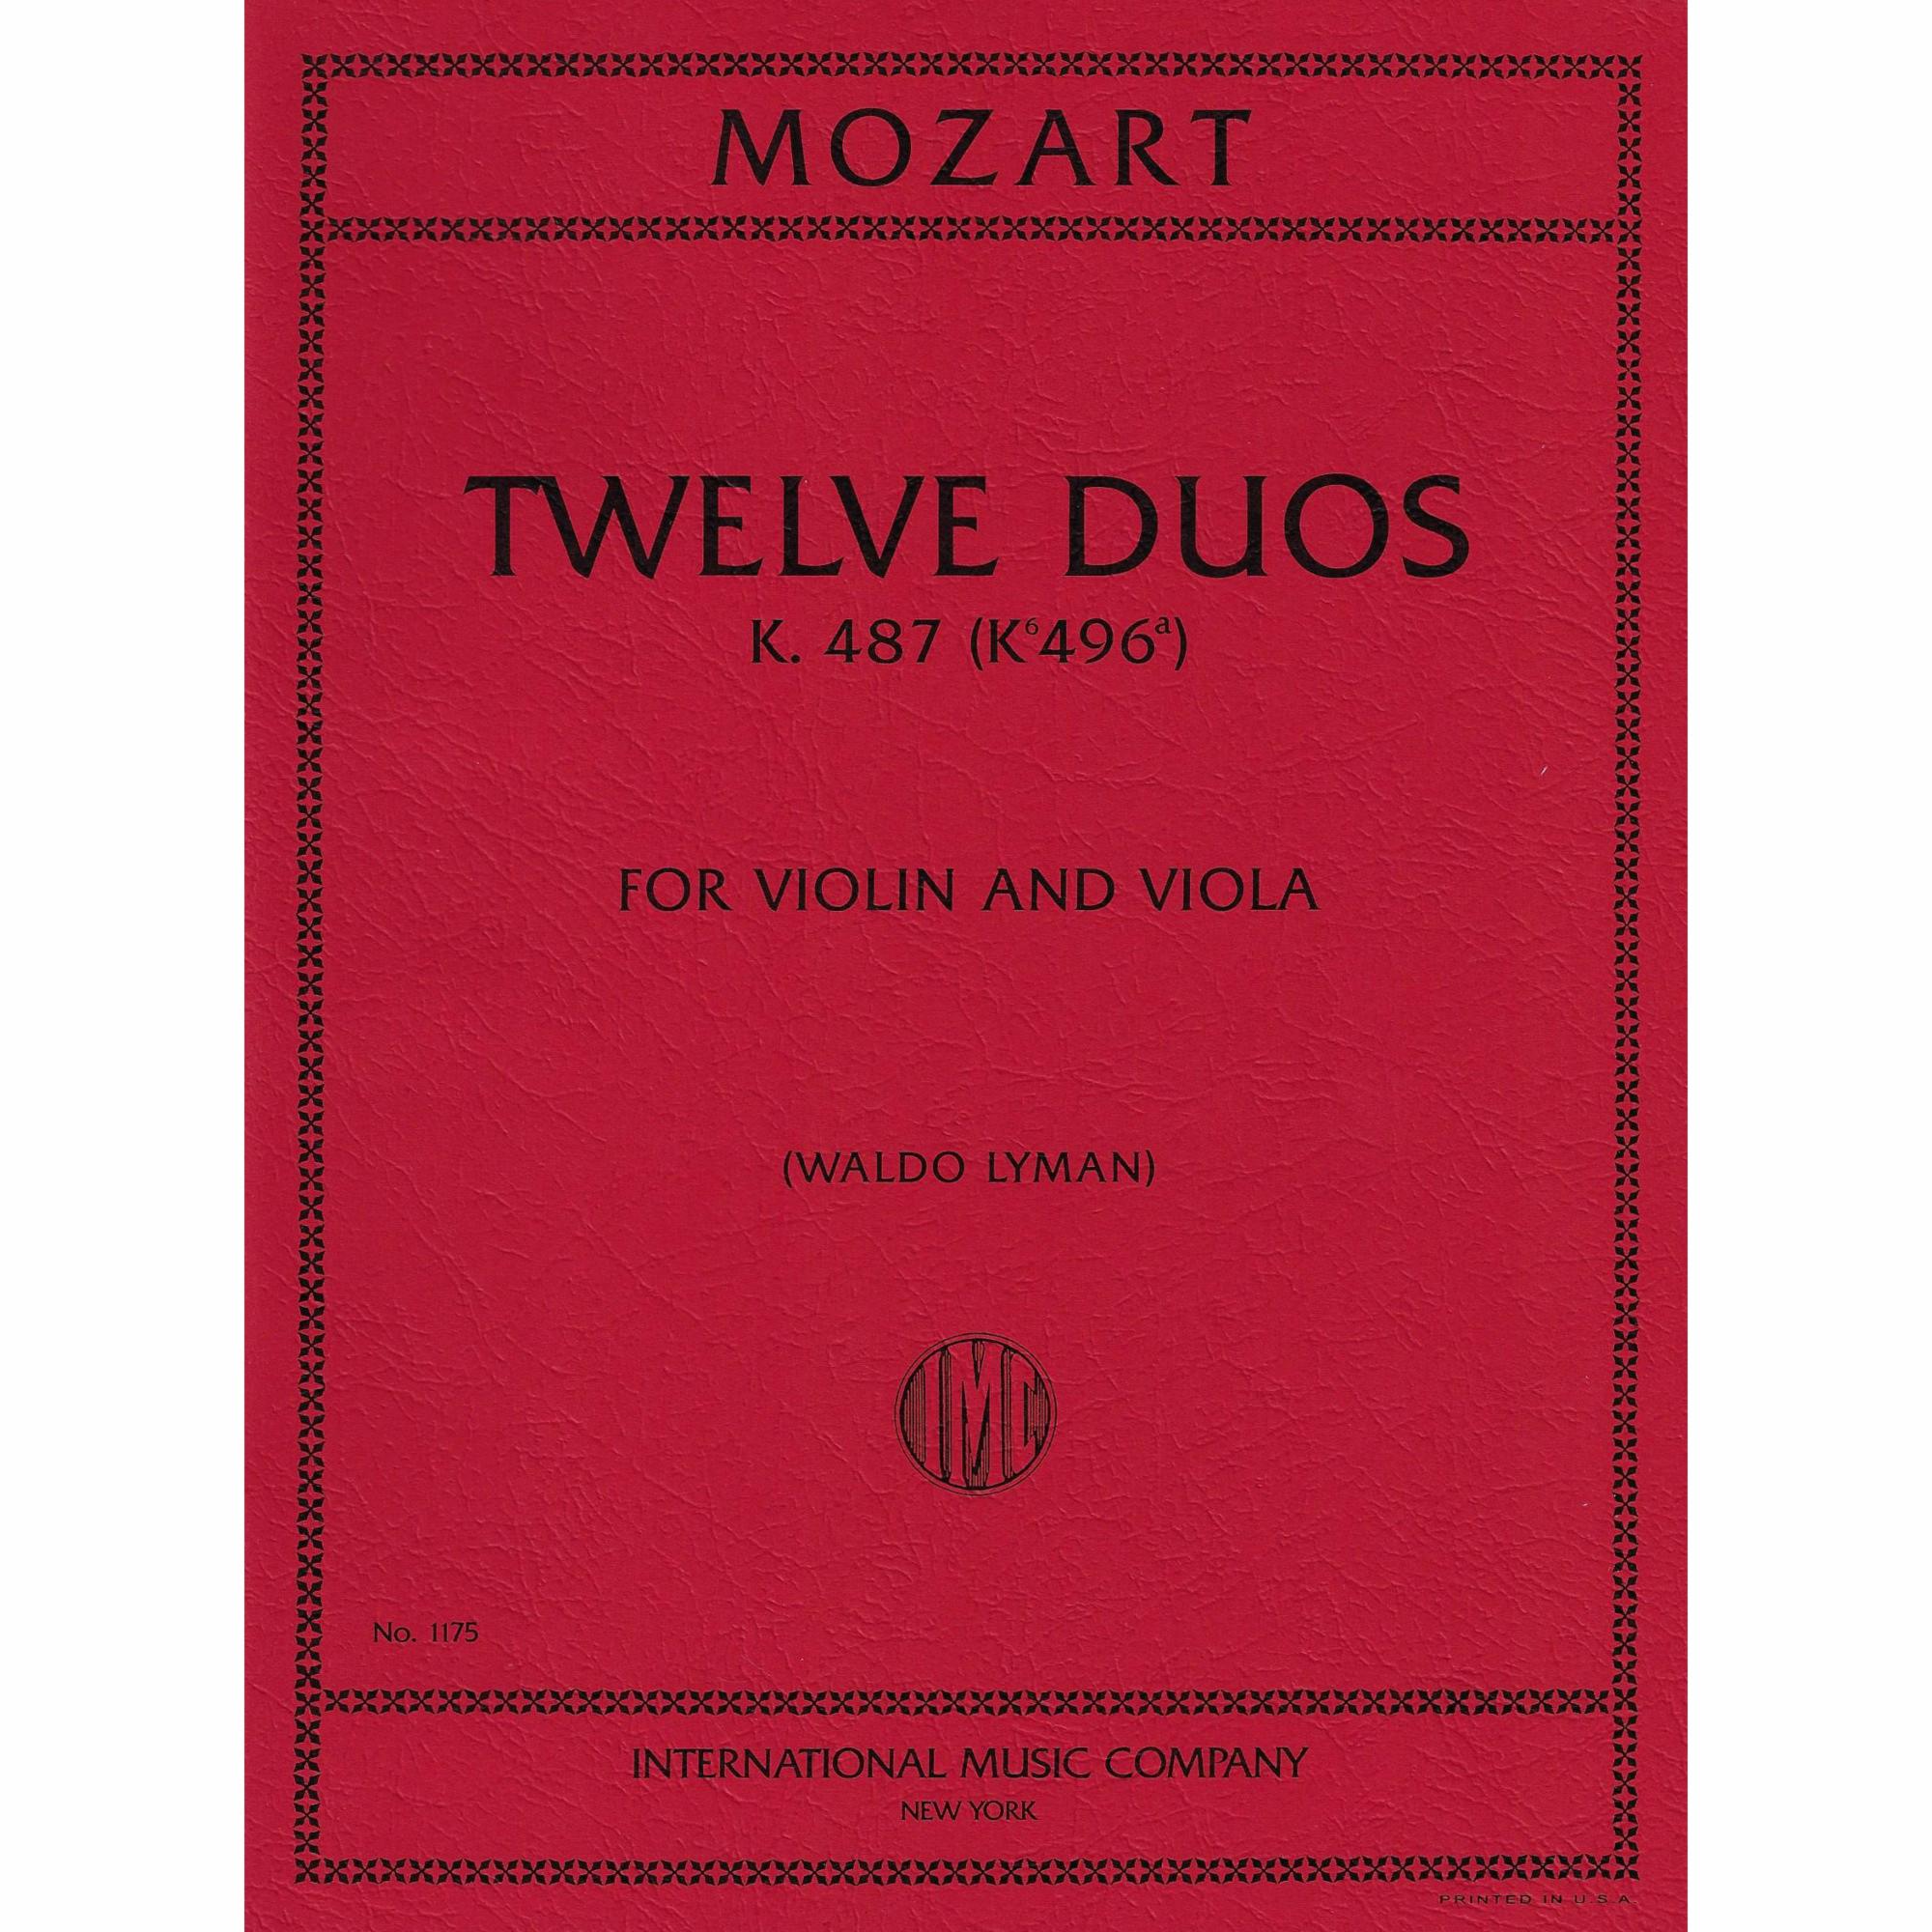 Mozart -- Twelve Duos, K. 487 for Violin and Viola